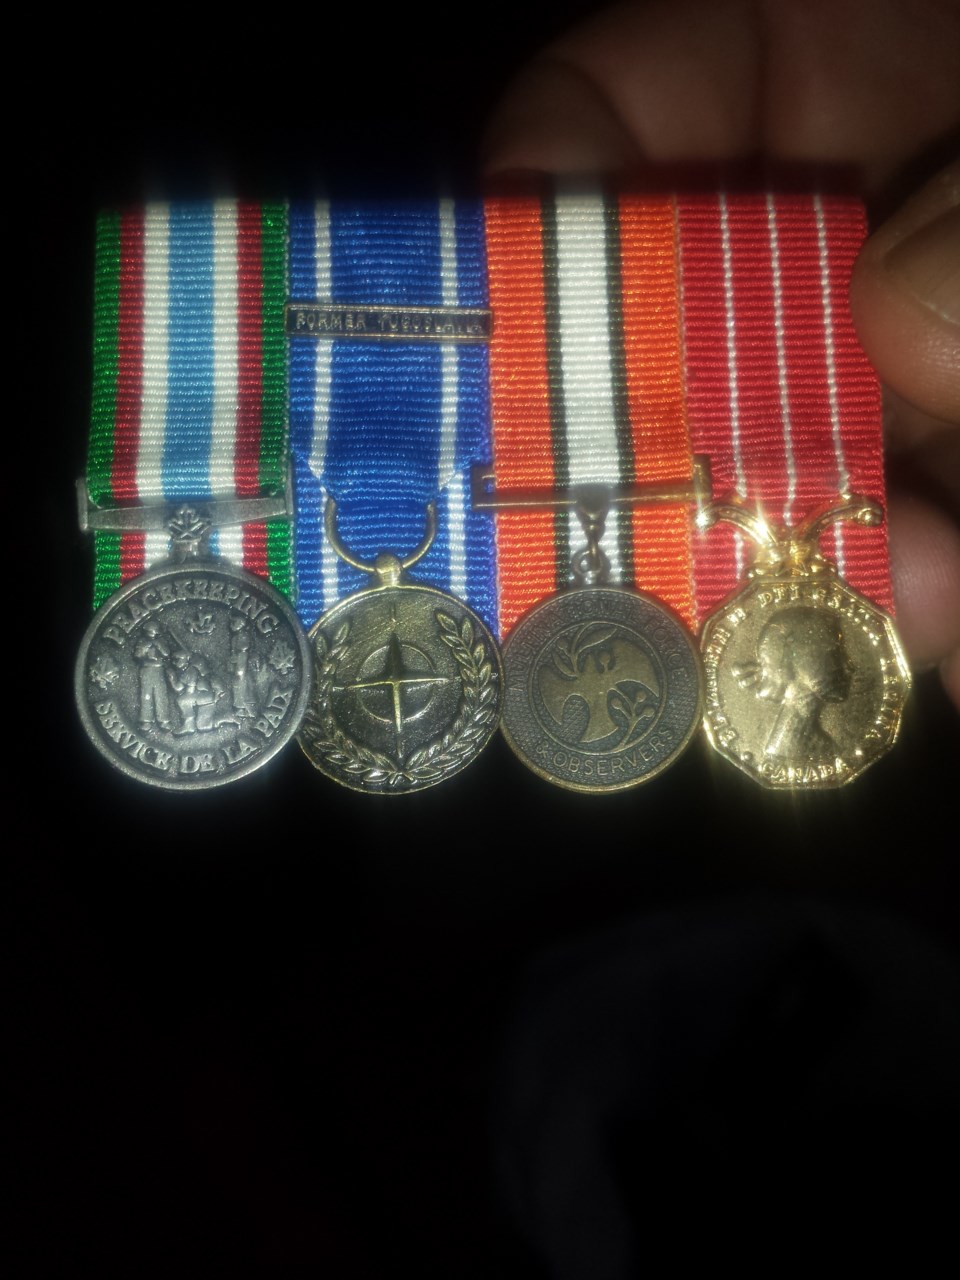 Service medals